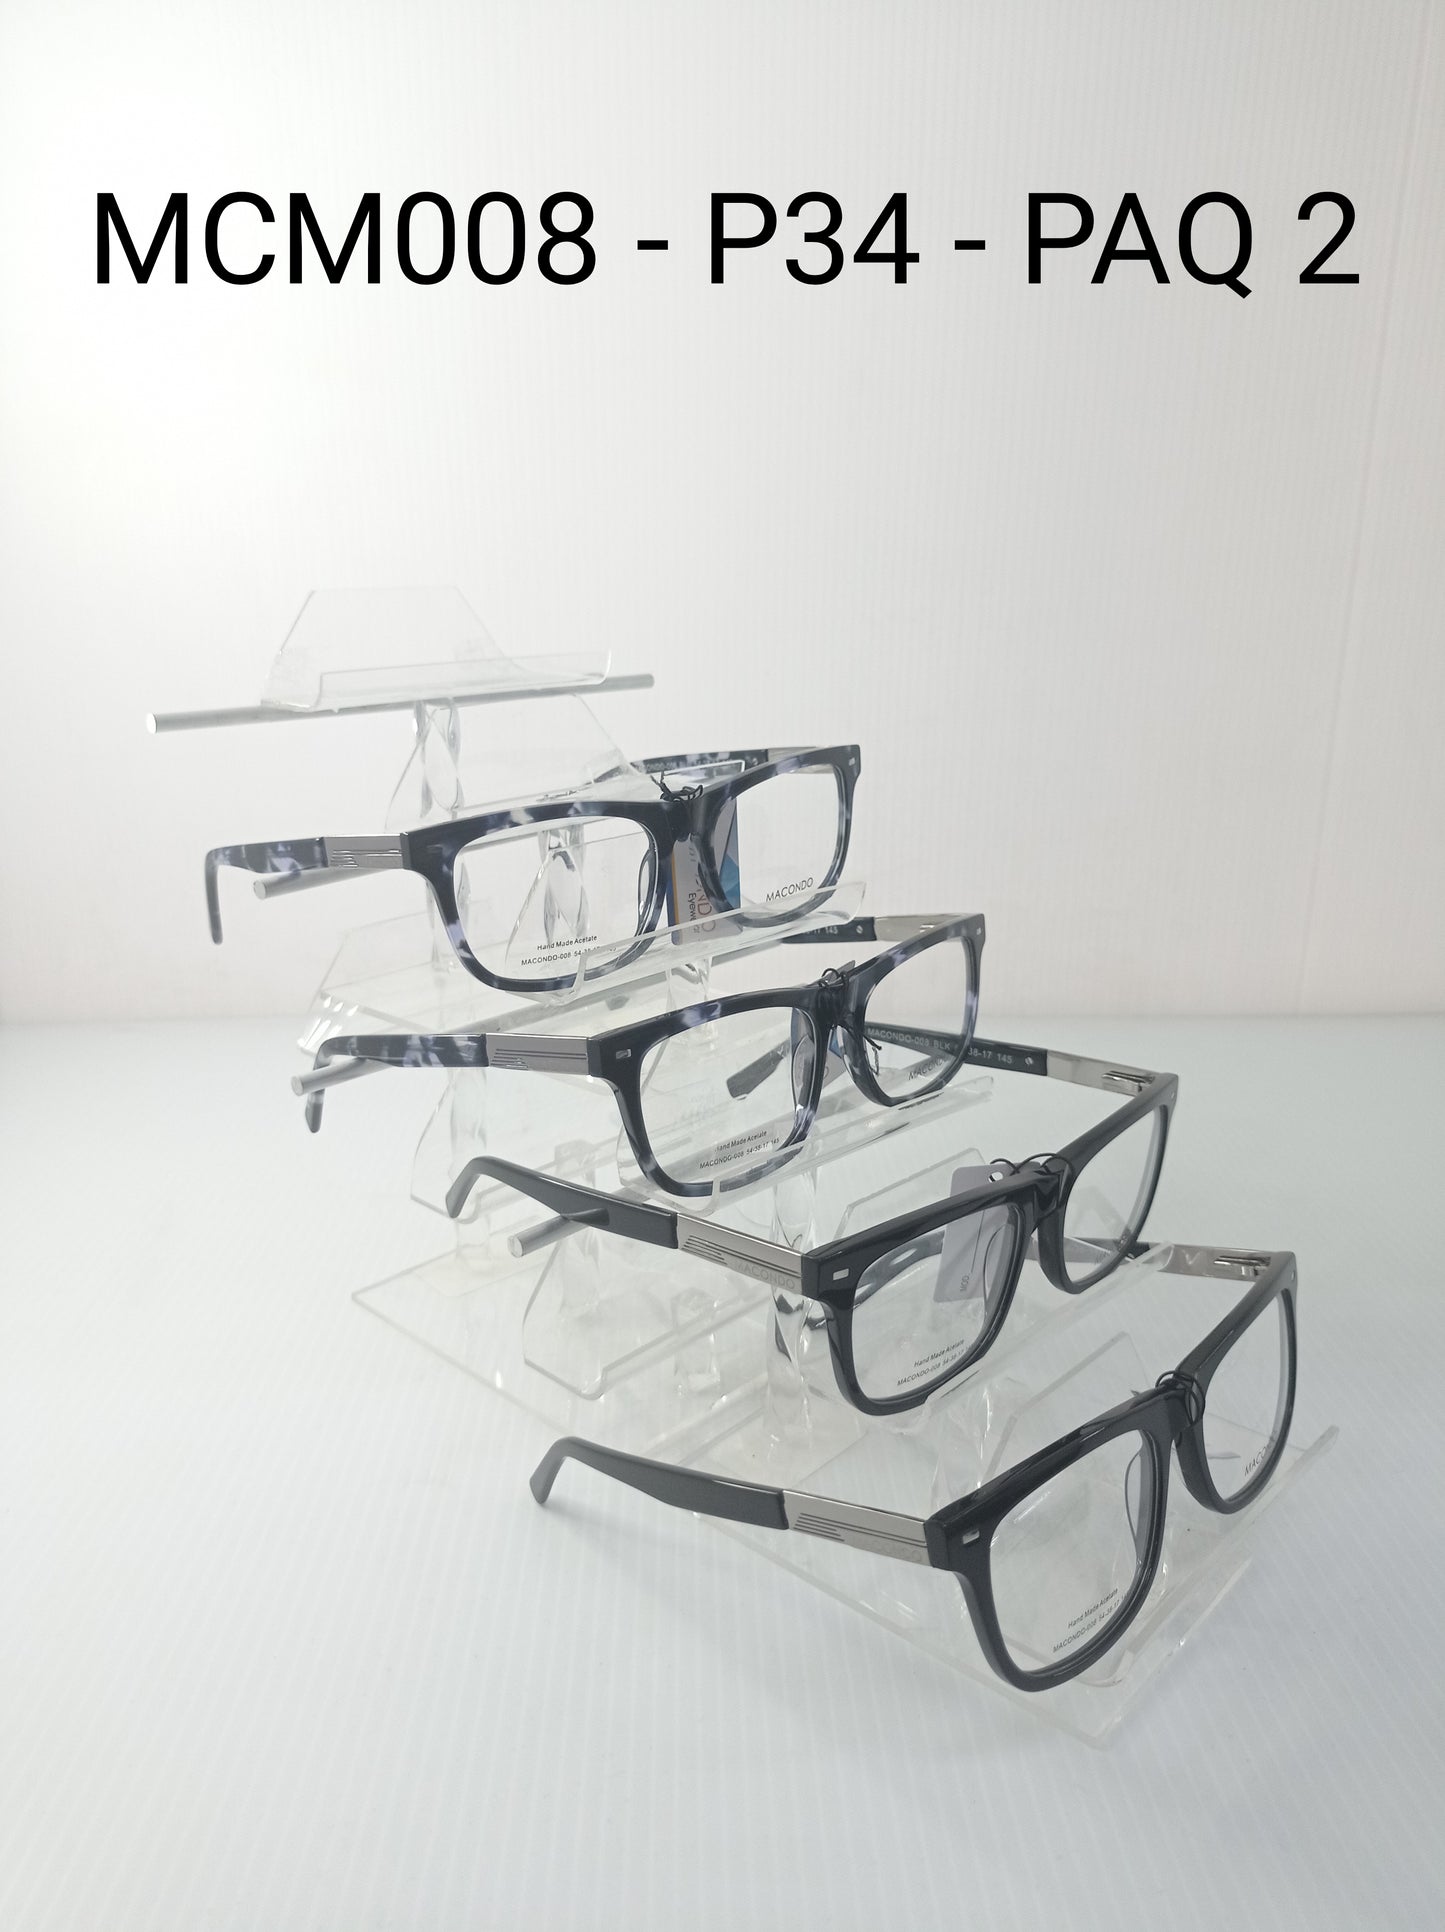 MACONDO - MCM008 - P34